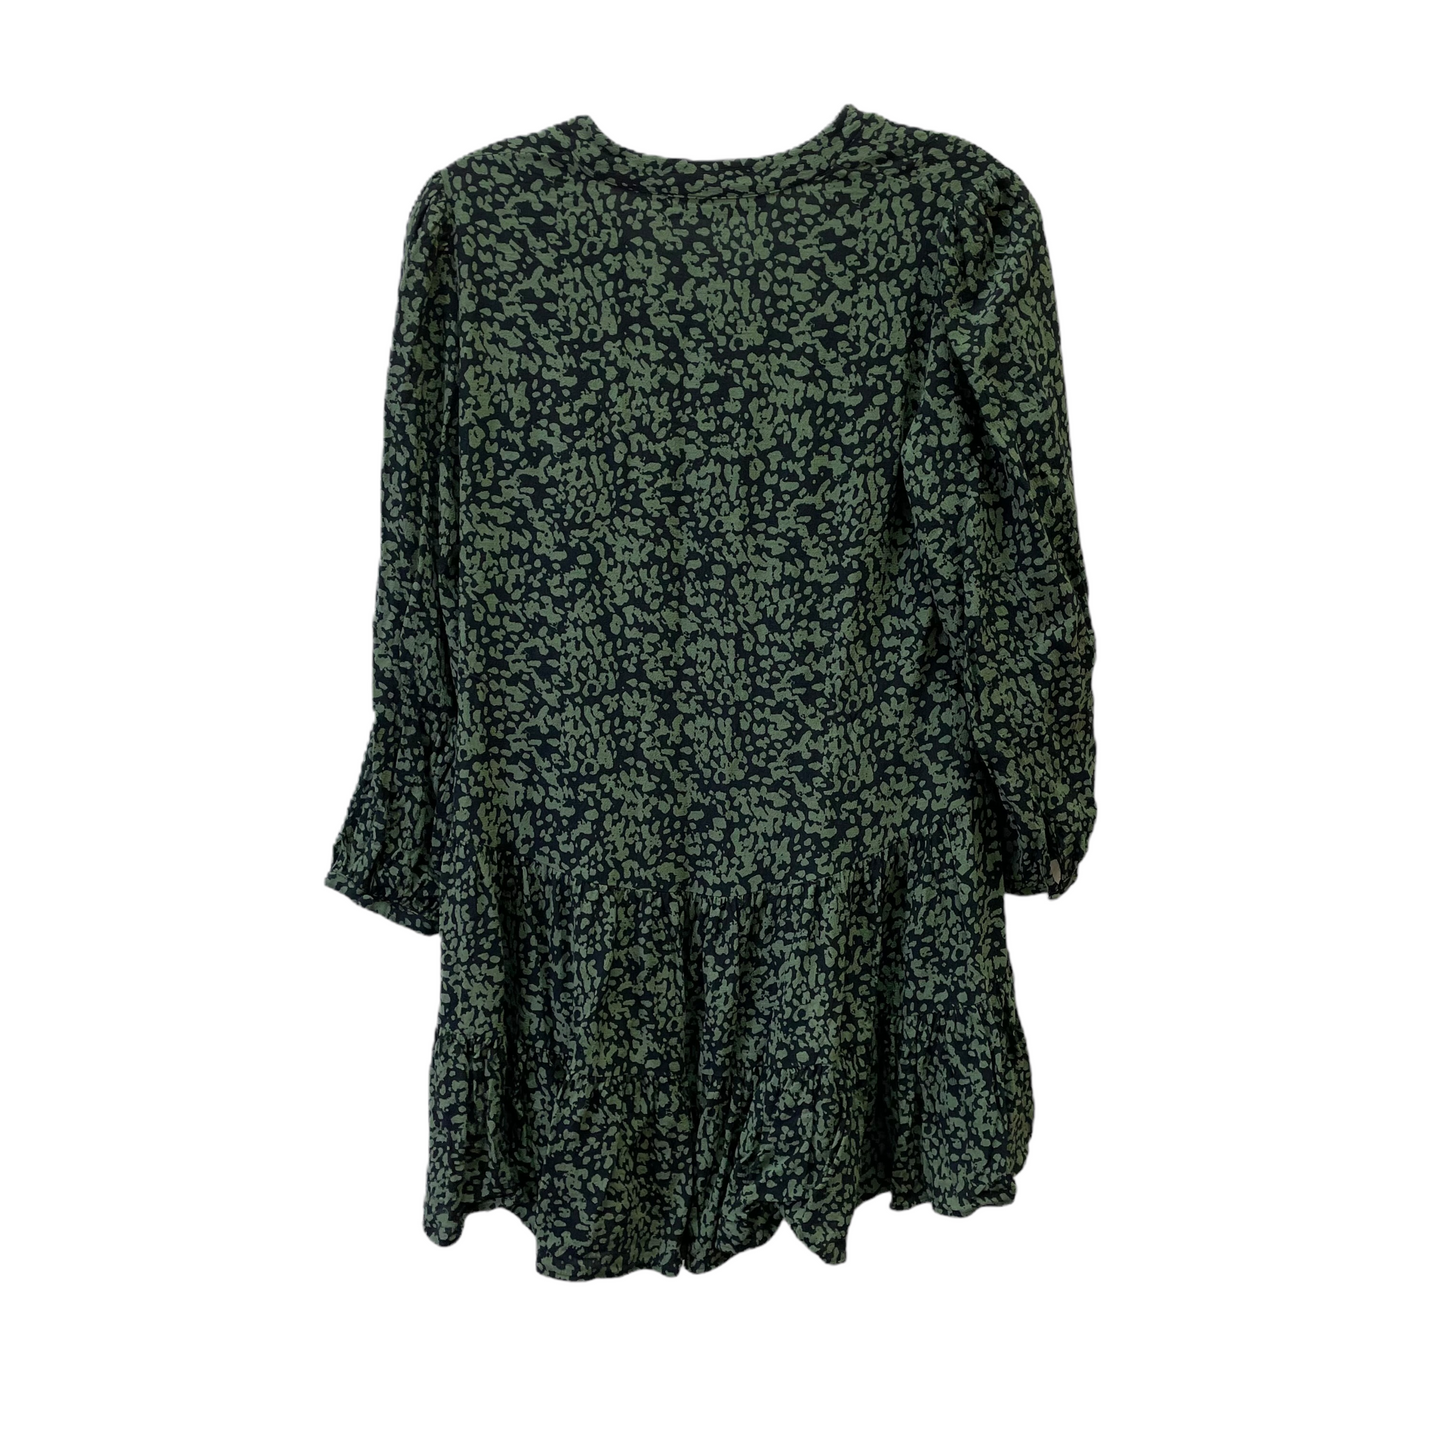 Green Top Long Sleeve Basic By Zaba, Size: Xs